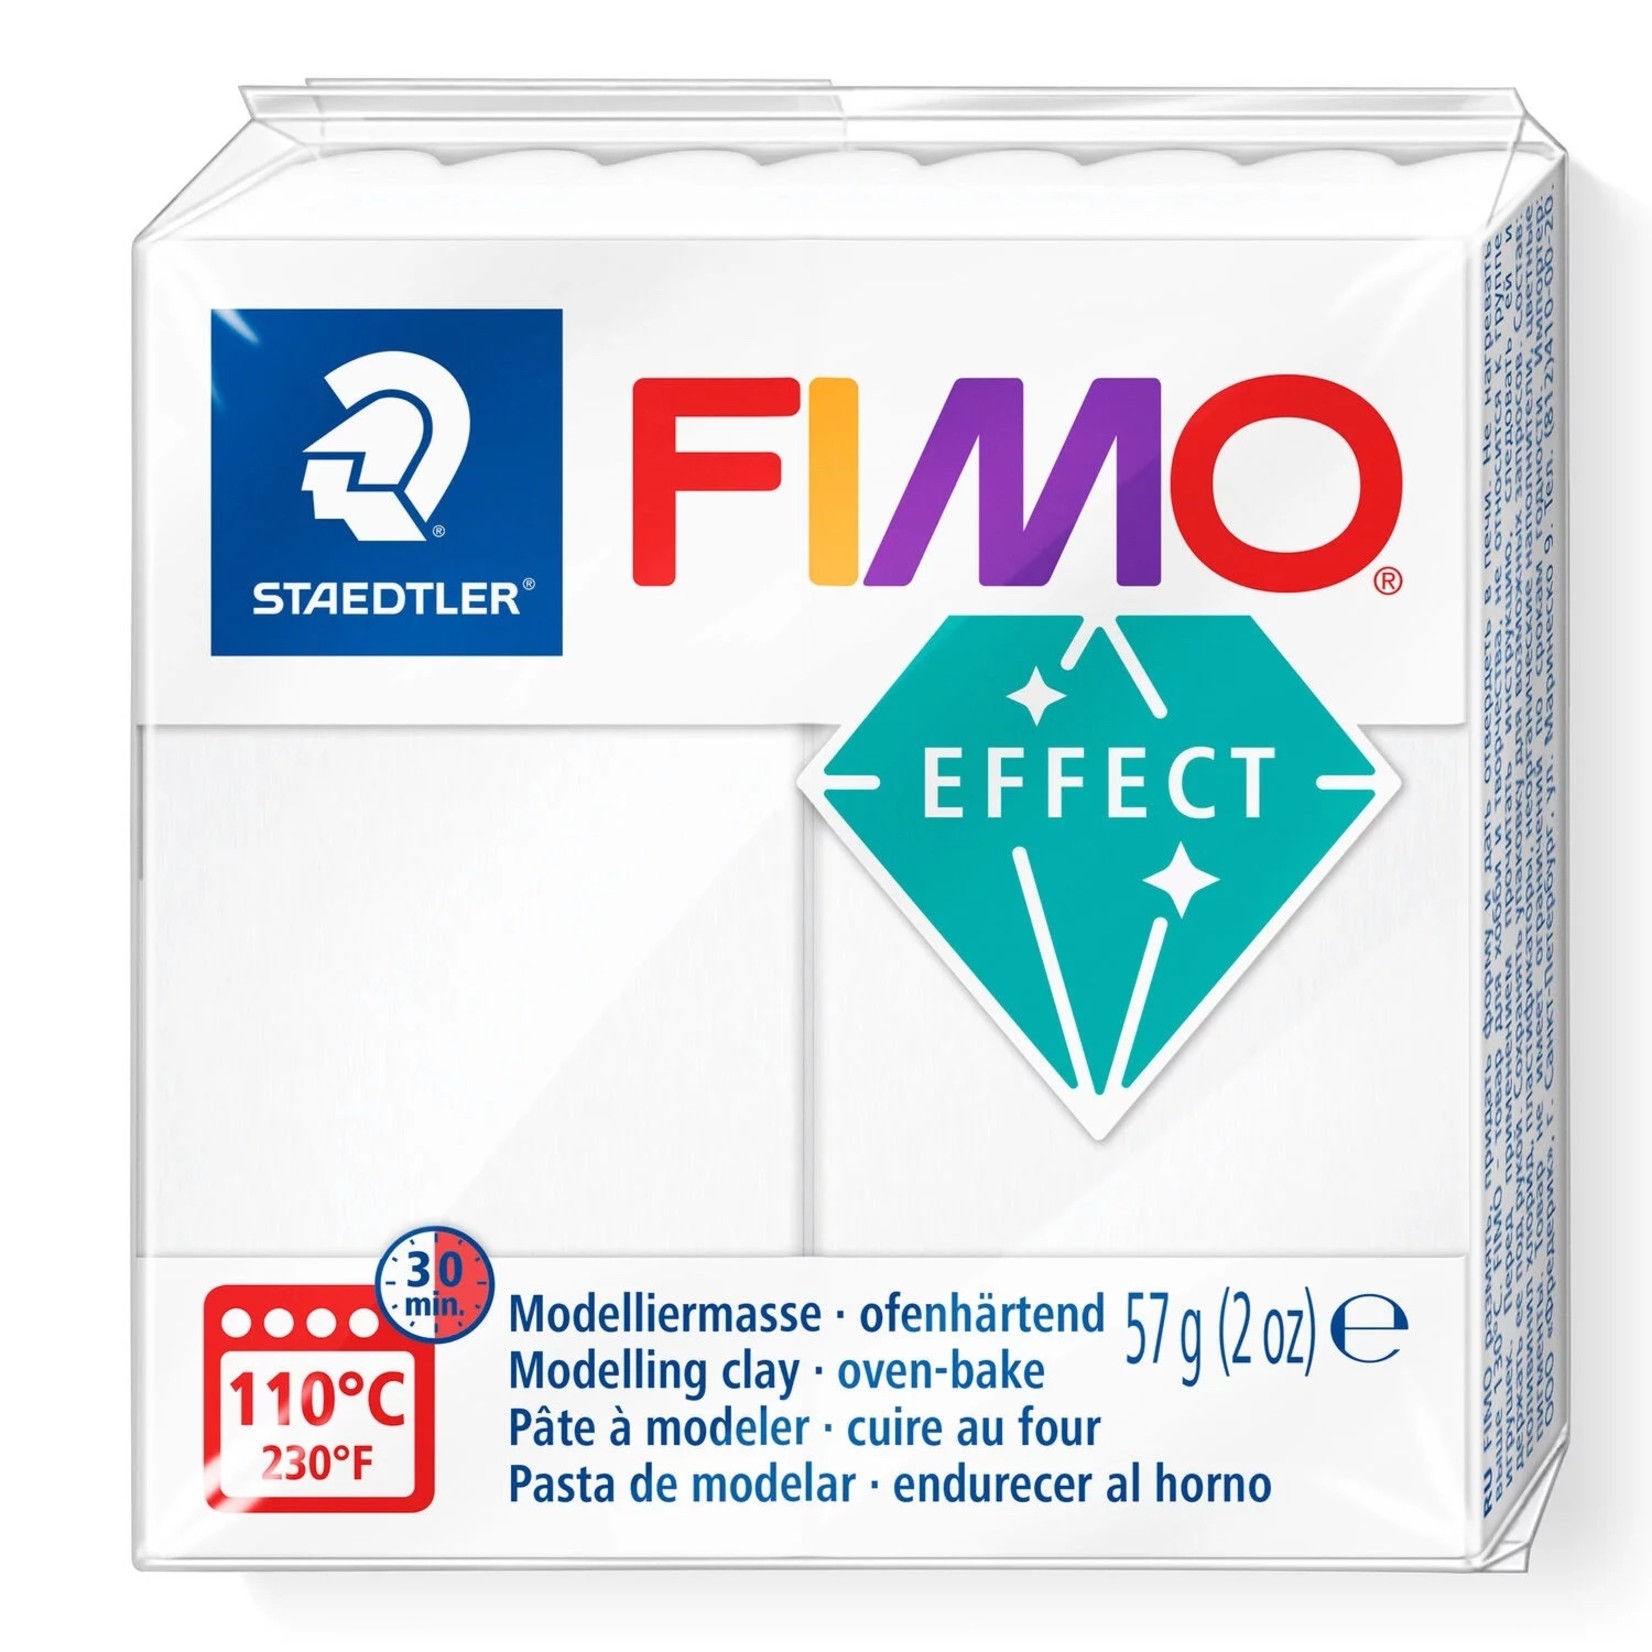 STAEDTLER FIMO EFFECT TRANSLUCENT 014 WHITE